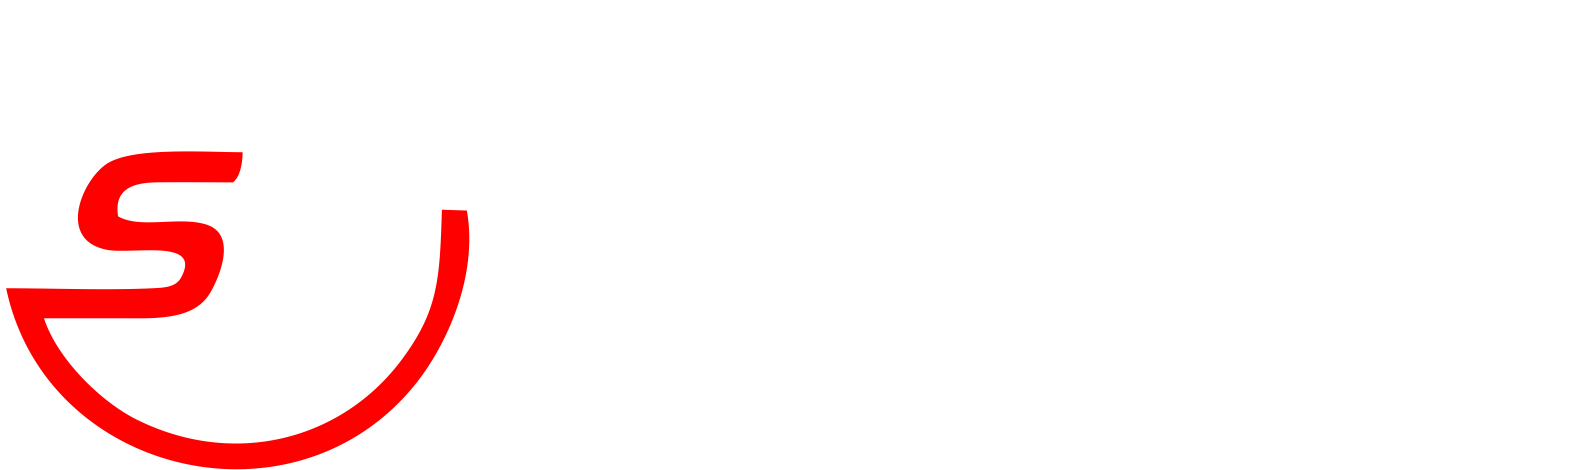 Stakefinex